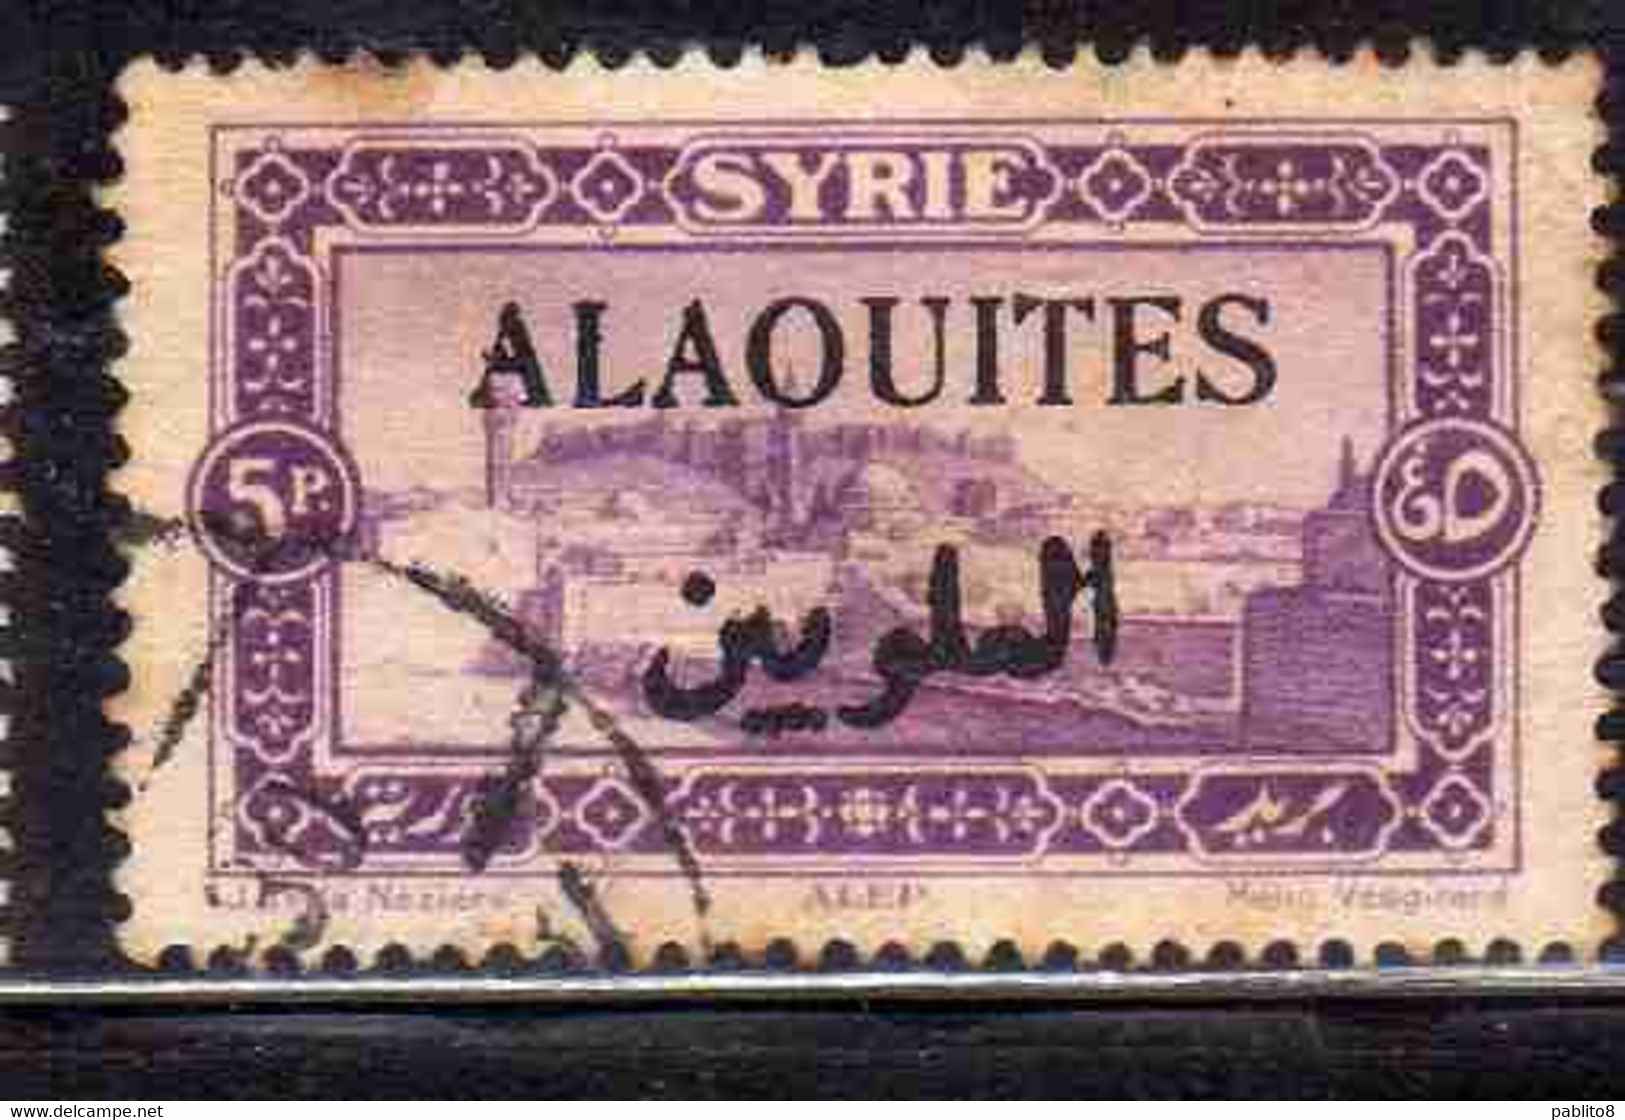 ALAOUITES SYRIA SIRIA ALAQUITES 1925 VIEW OF ALEPPO 5p USED USATO OBLITERE' - Used Stamps